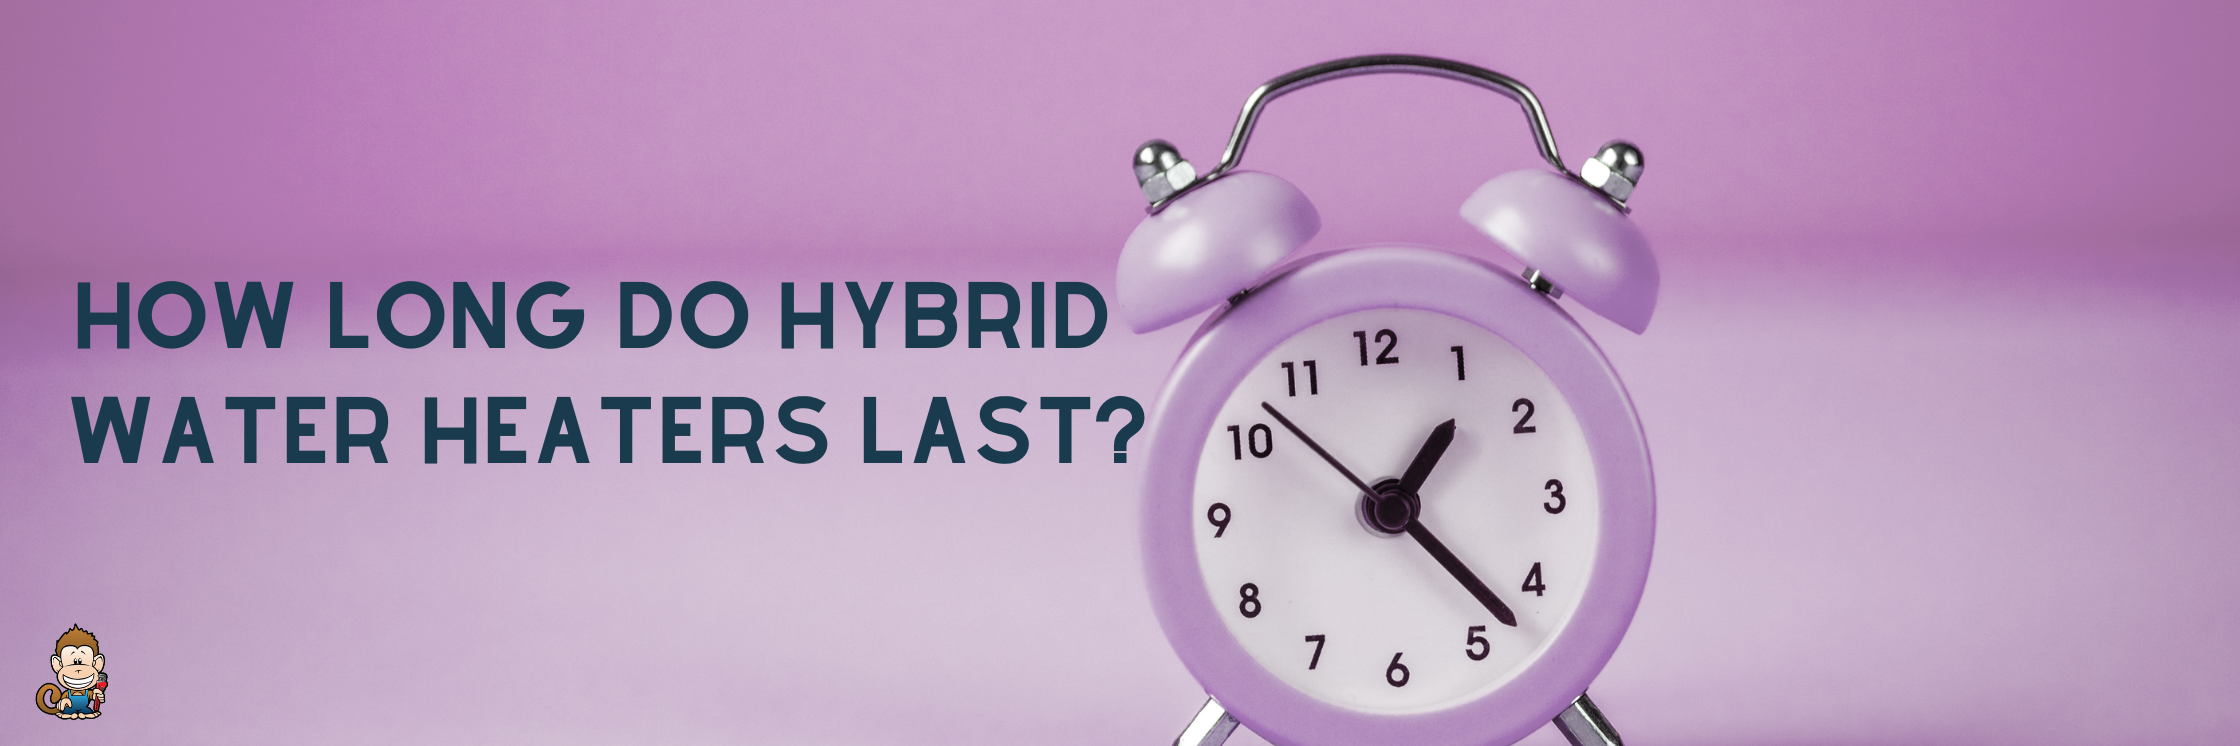 How Long Do Hybrid Water Heaters Last?